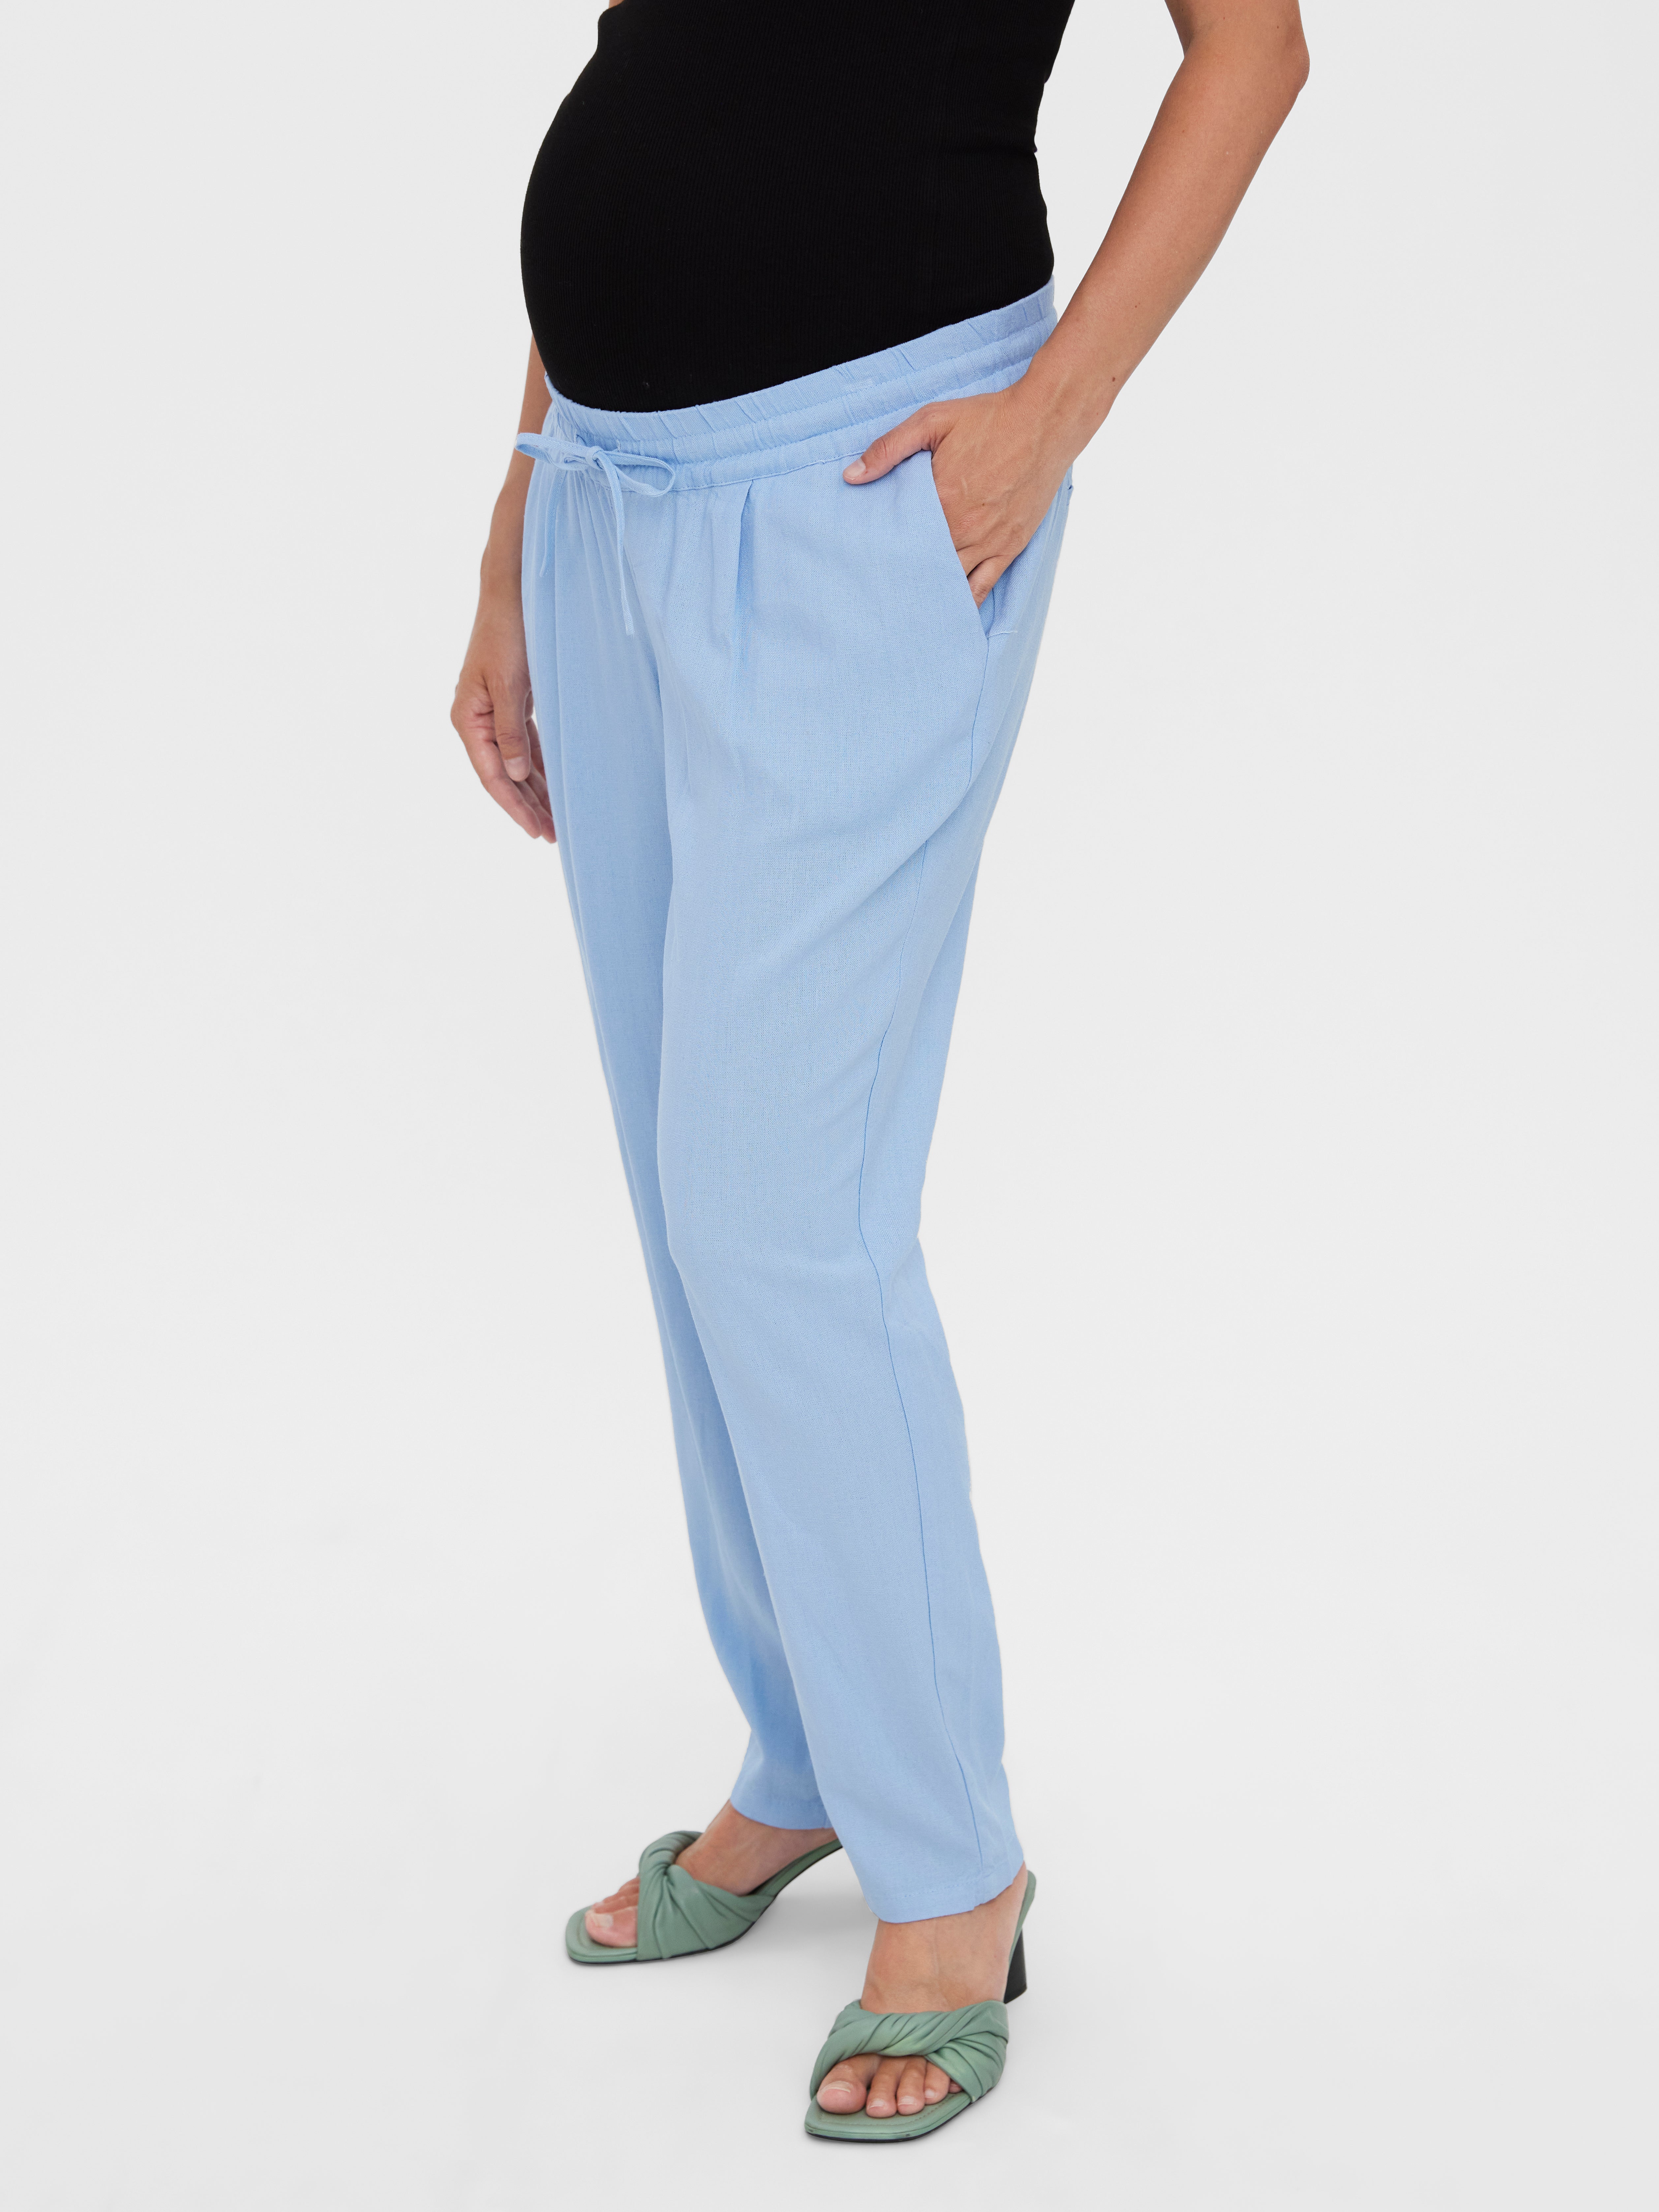 Classic Women's Maternity Healthcare Trouser, Navy | Simon Jersey